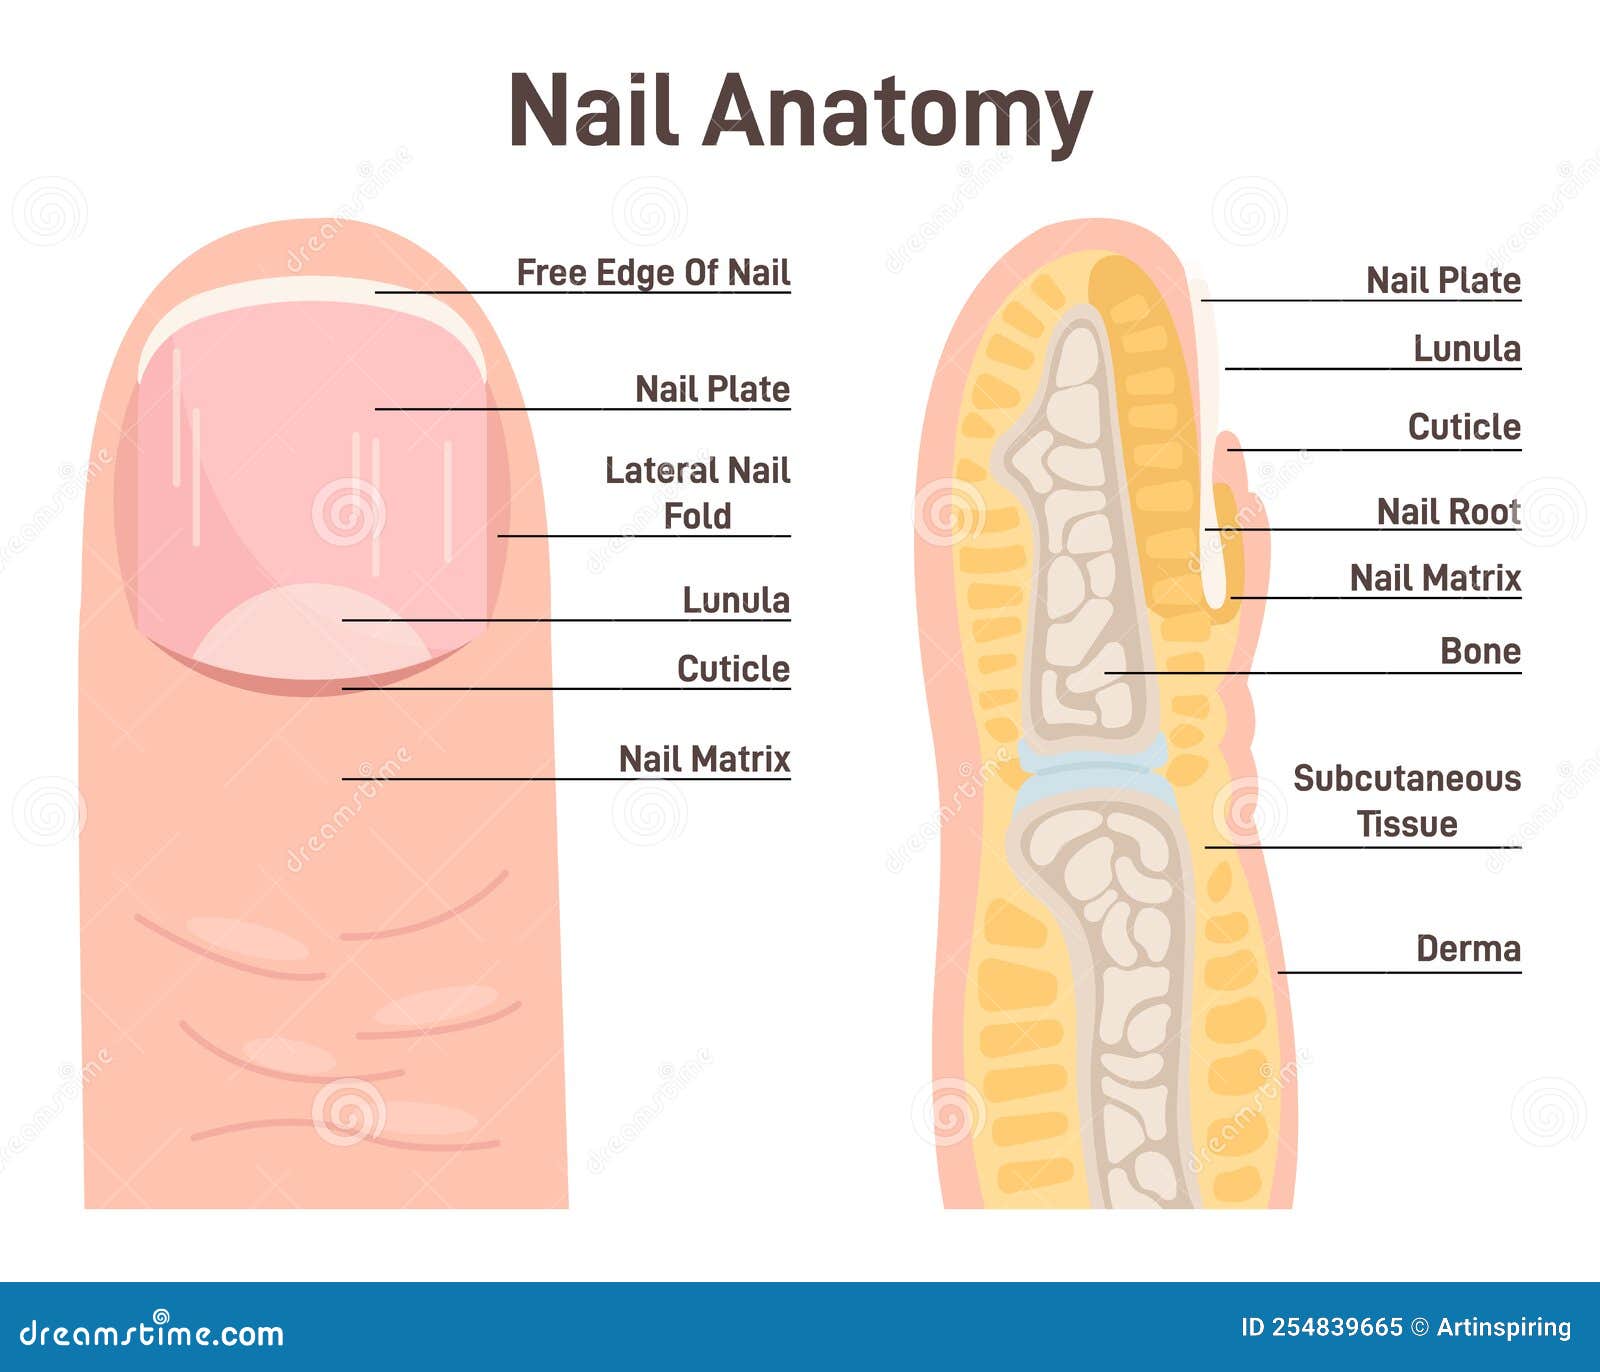 nail anatomy cross section finger nail structure fingertip side scheme nail anatomy cross section finger nail structure 254839665